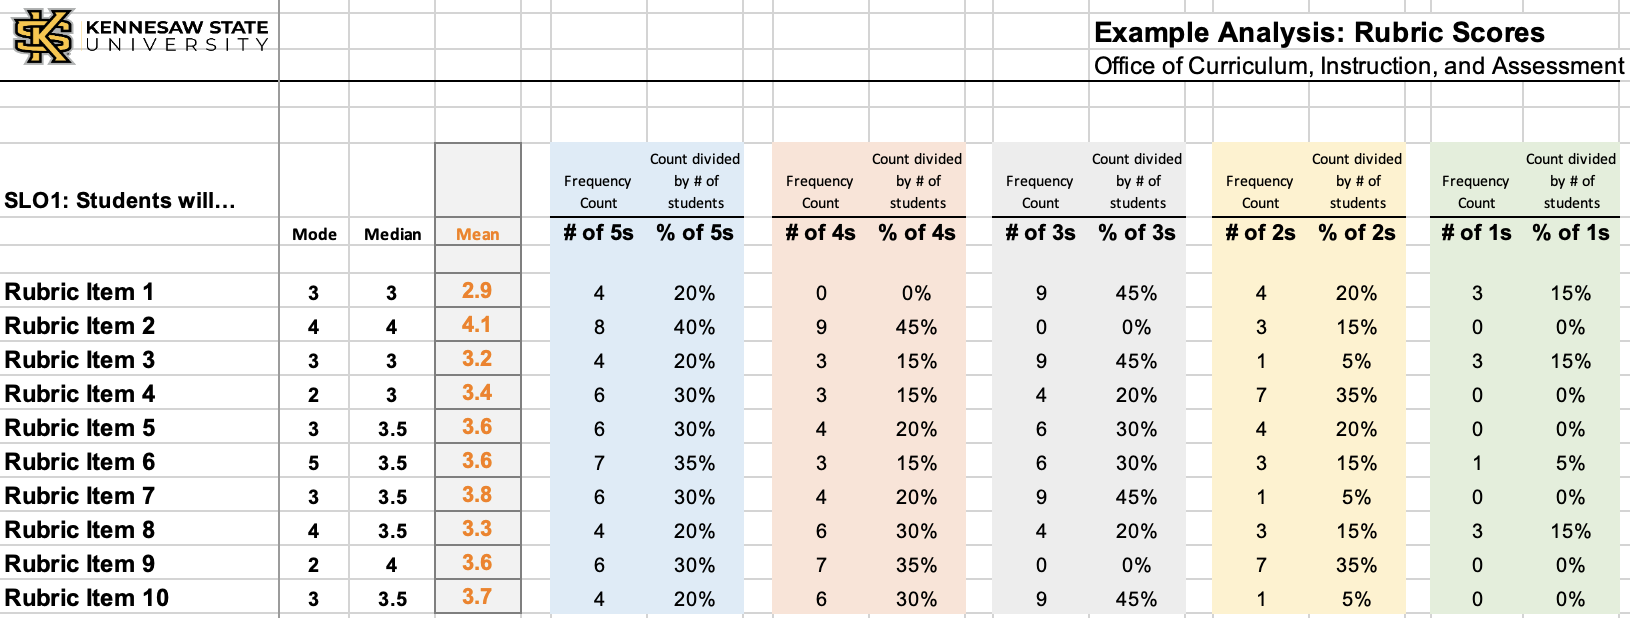 KSU Rubric Analysis - Screenshot